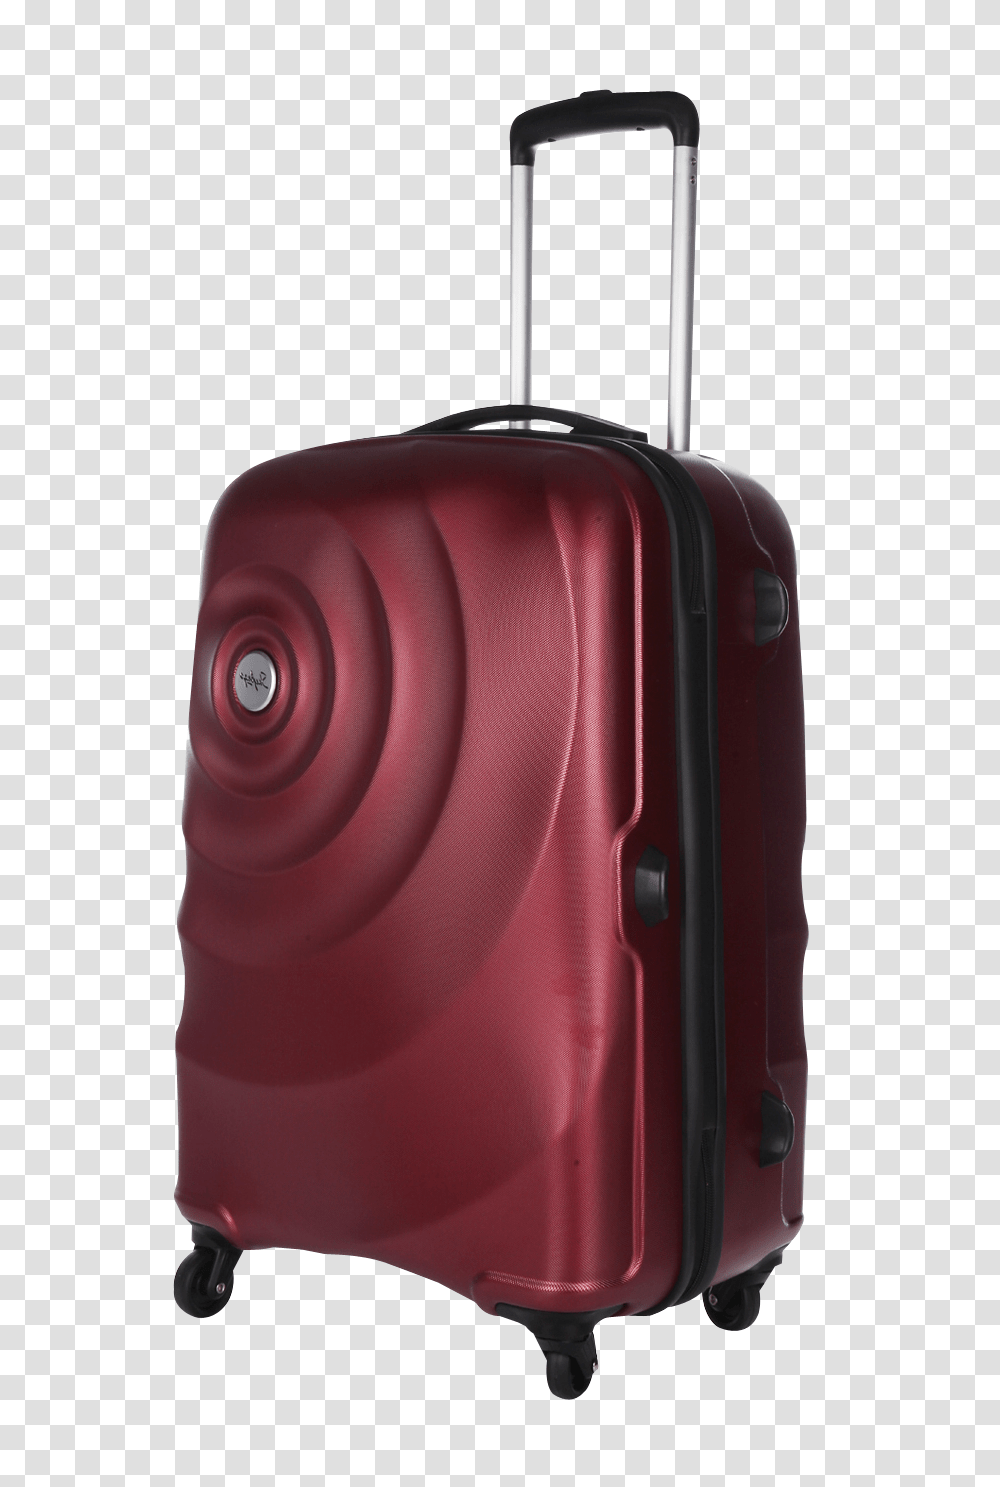 Strolley Bag Image, Luggage, Suitcase, Backpack Transparent Png